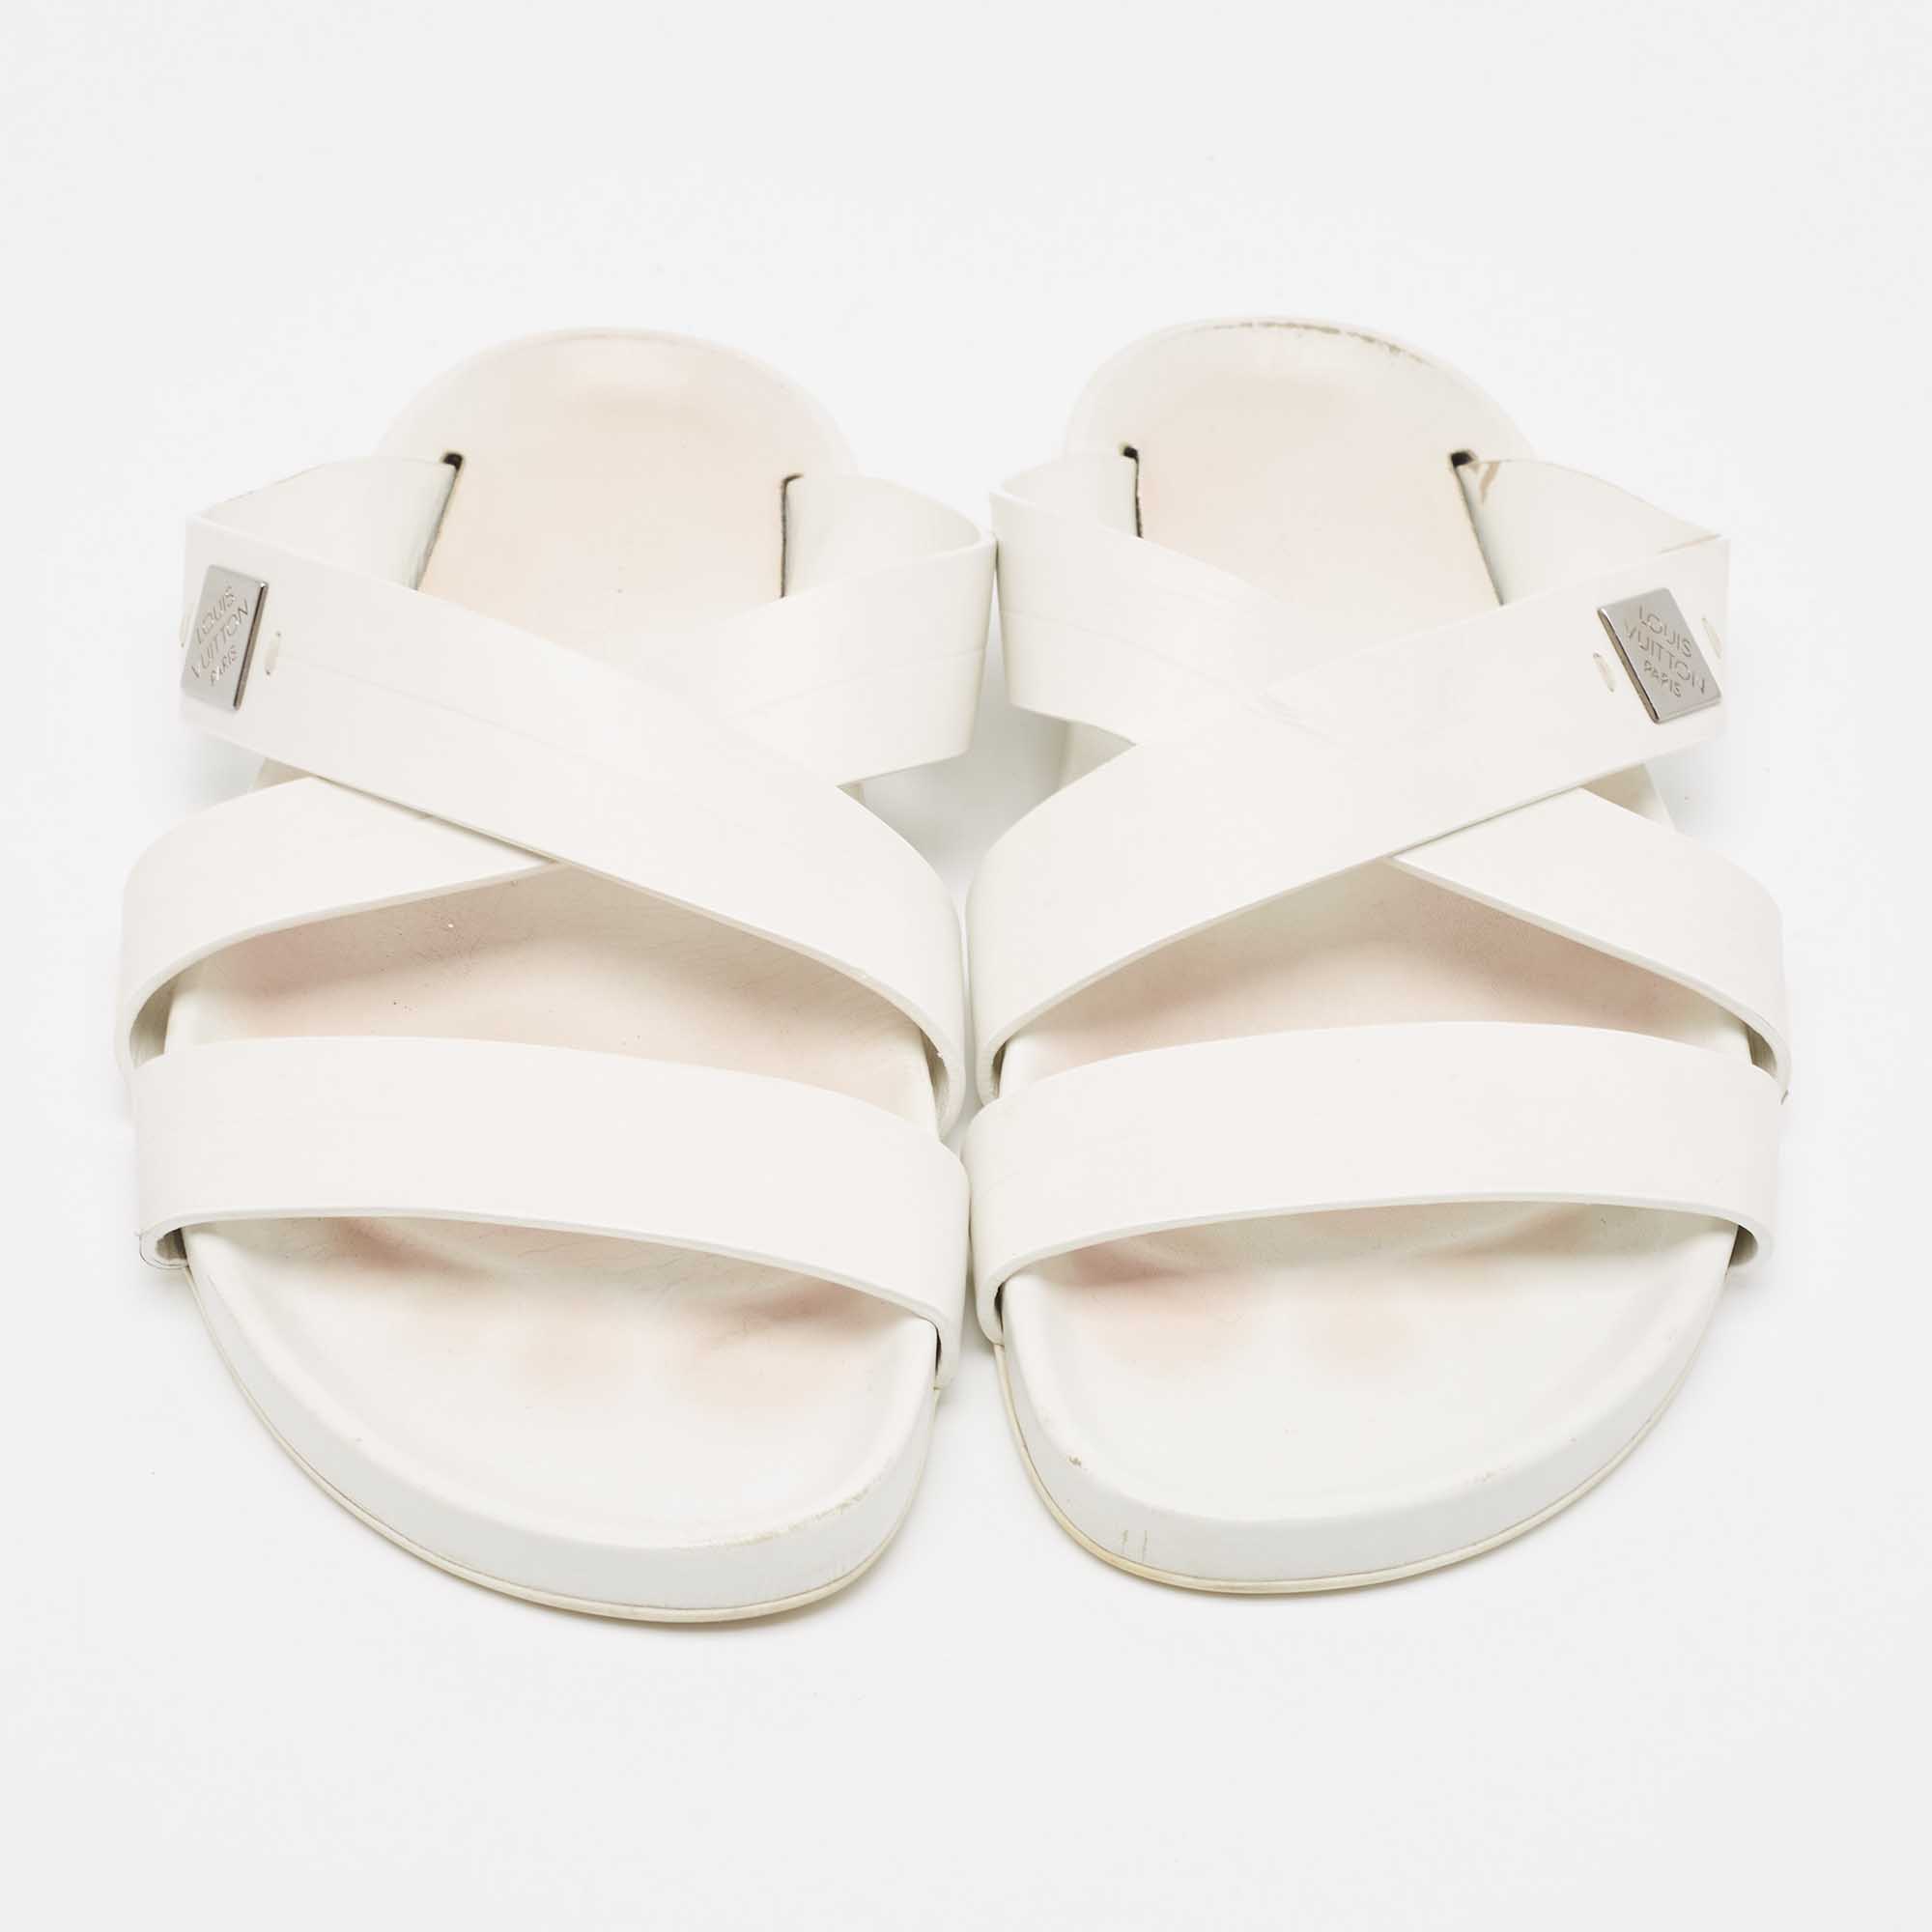 Louis Vuitton White Leather Sunset Velcro Slide Sandals Size 36